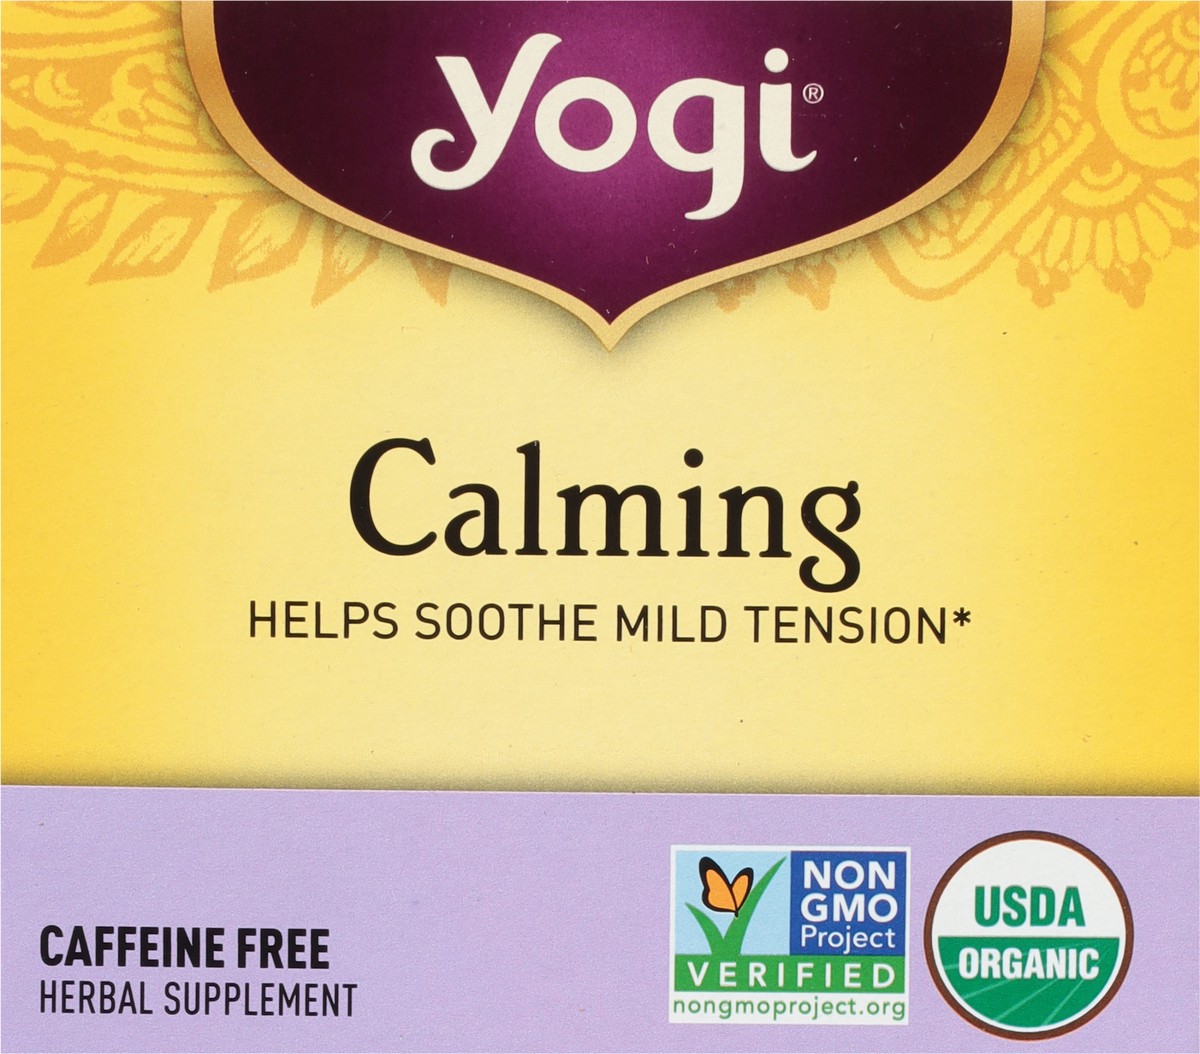 slide 6 of 9, Yogi Caffeine Free Calming Tea Bags Herbal Supplement 16 ea, 16 ct